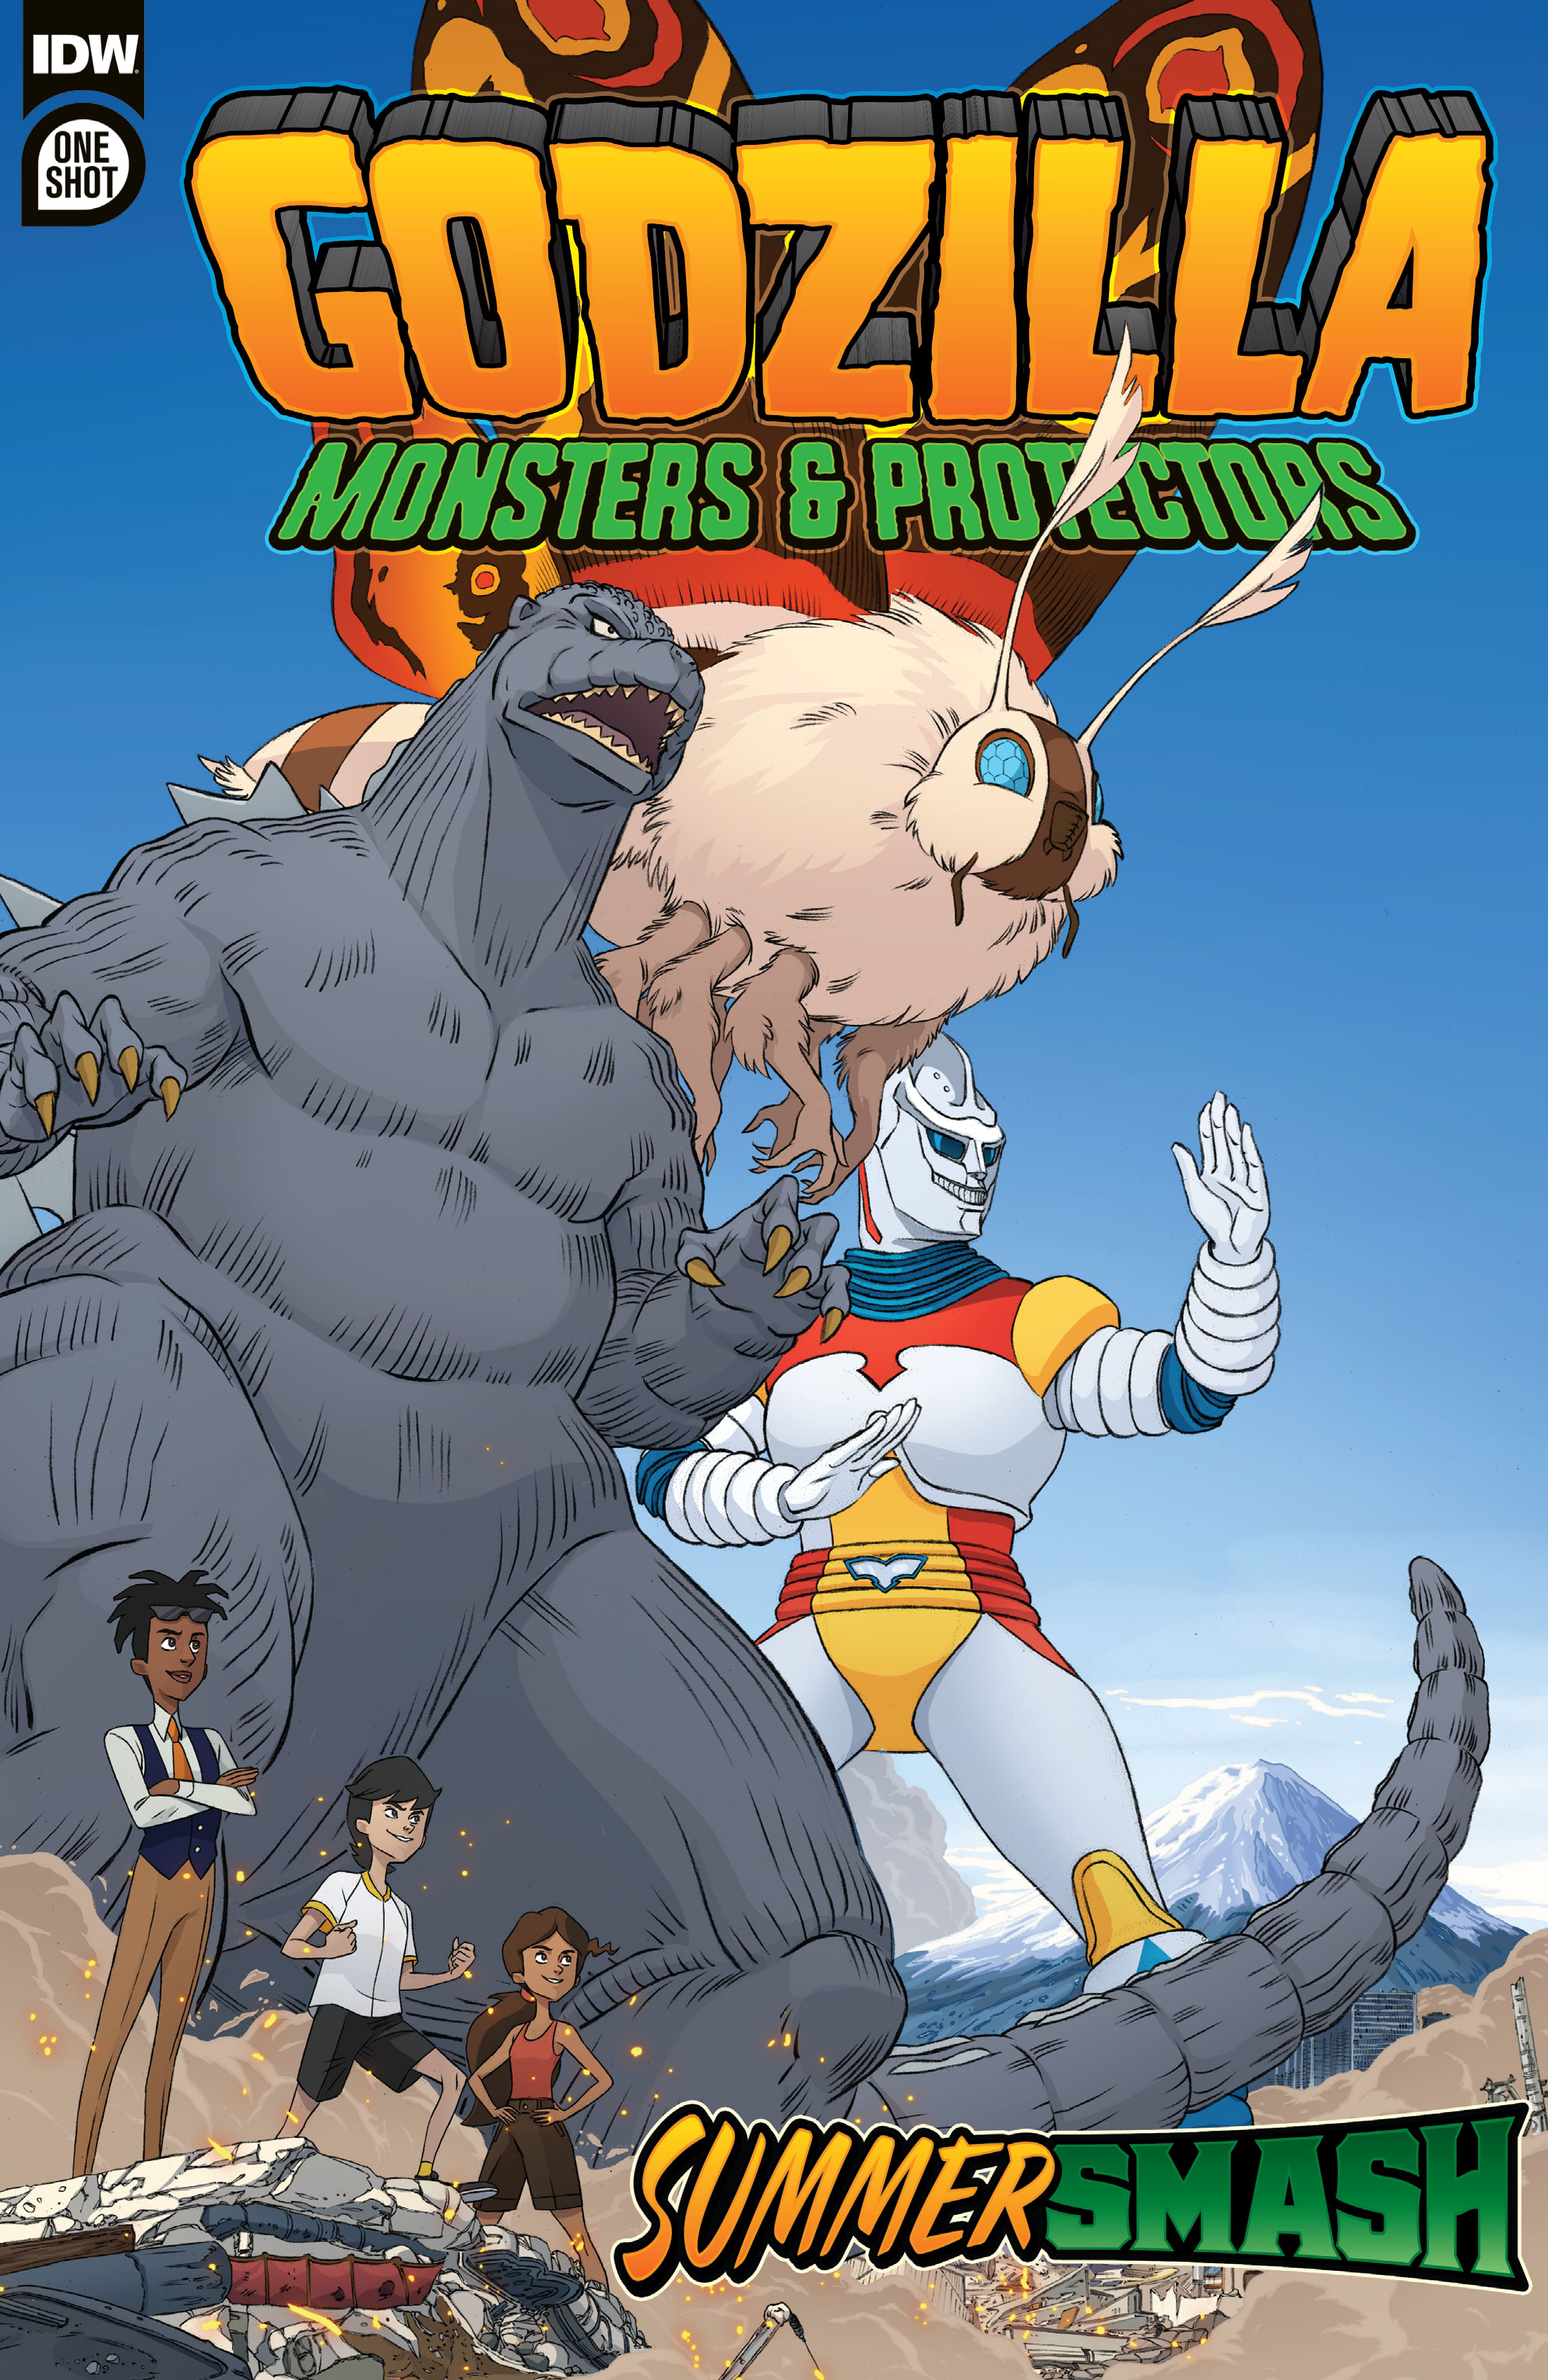 Read online Godzilla: Monsters & Protectors - Summer Smash comic -  Issue # Full - 1